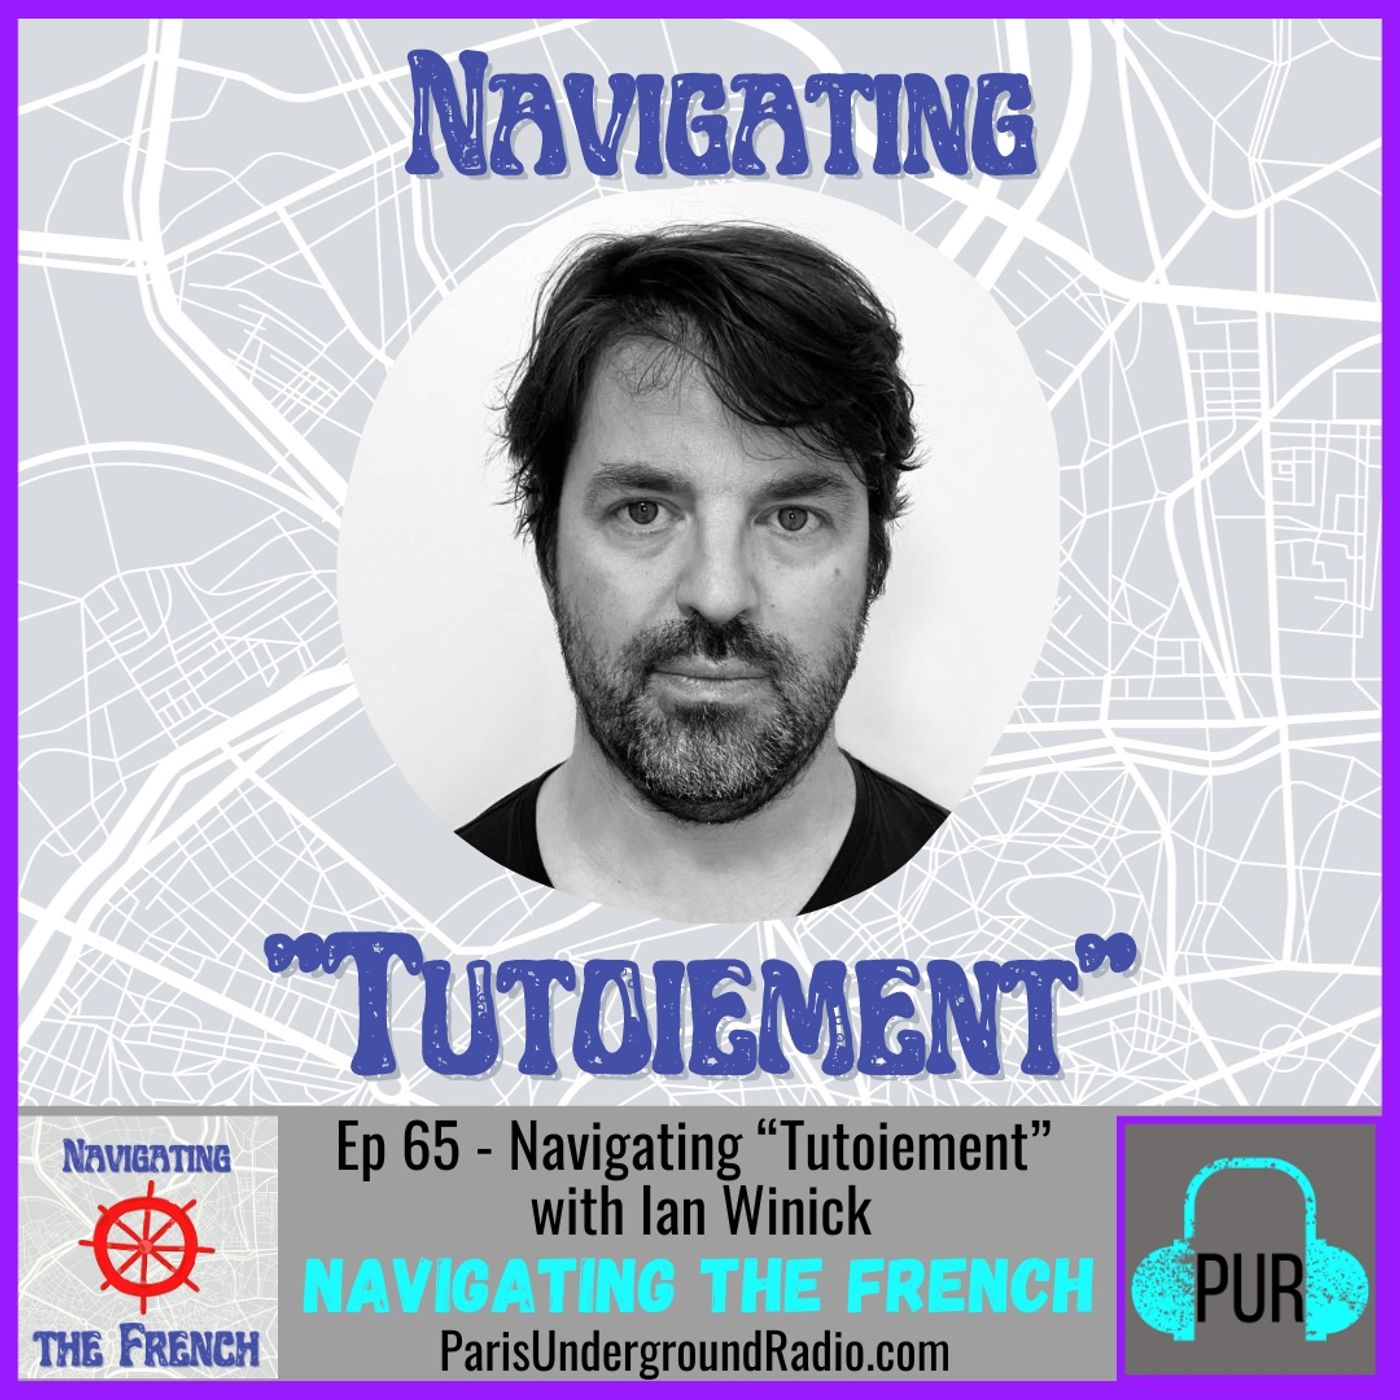 Ep 65 - Navigating “Tutoiement” with Ian Winick